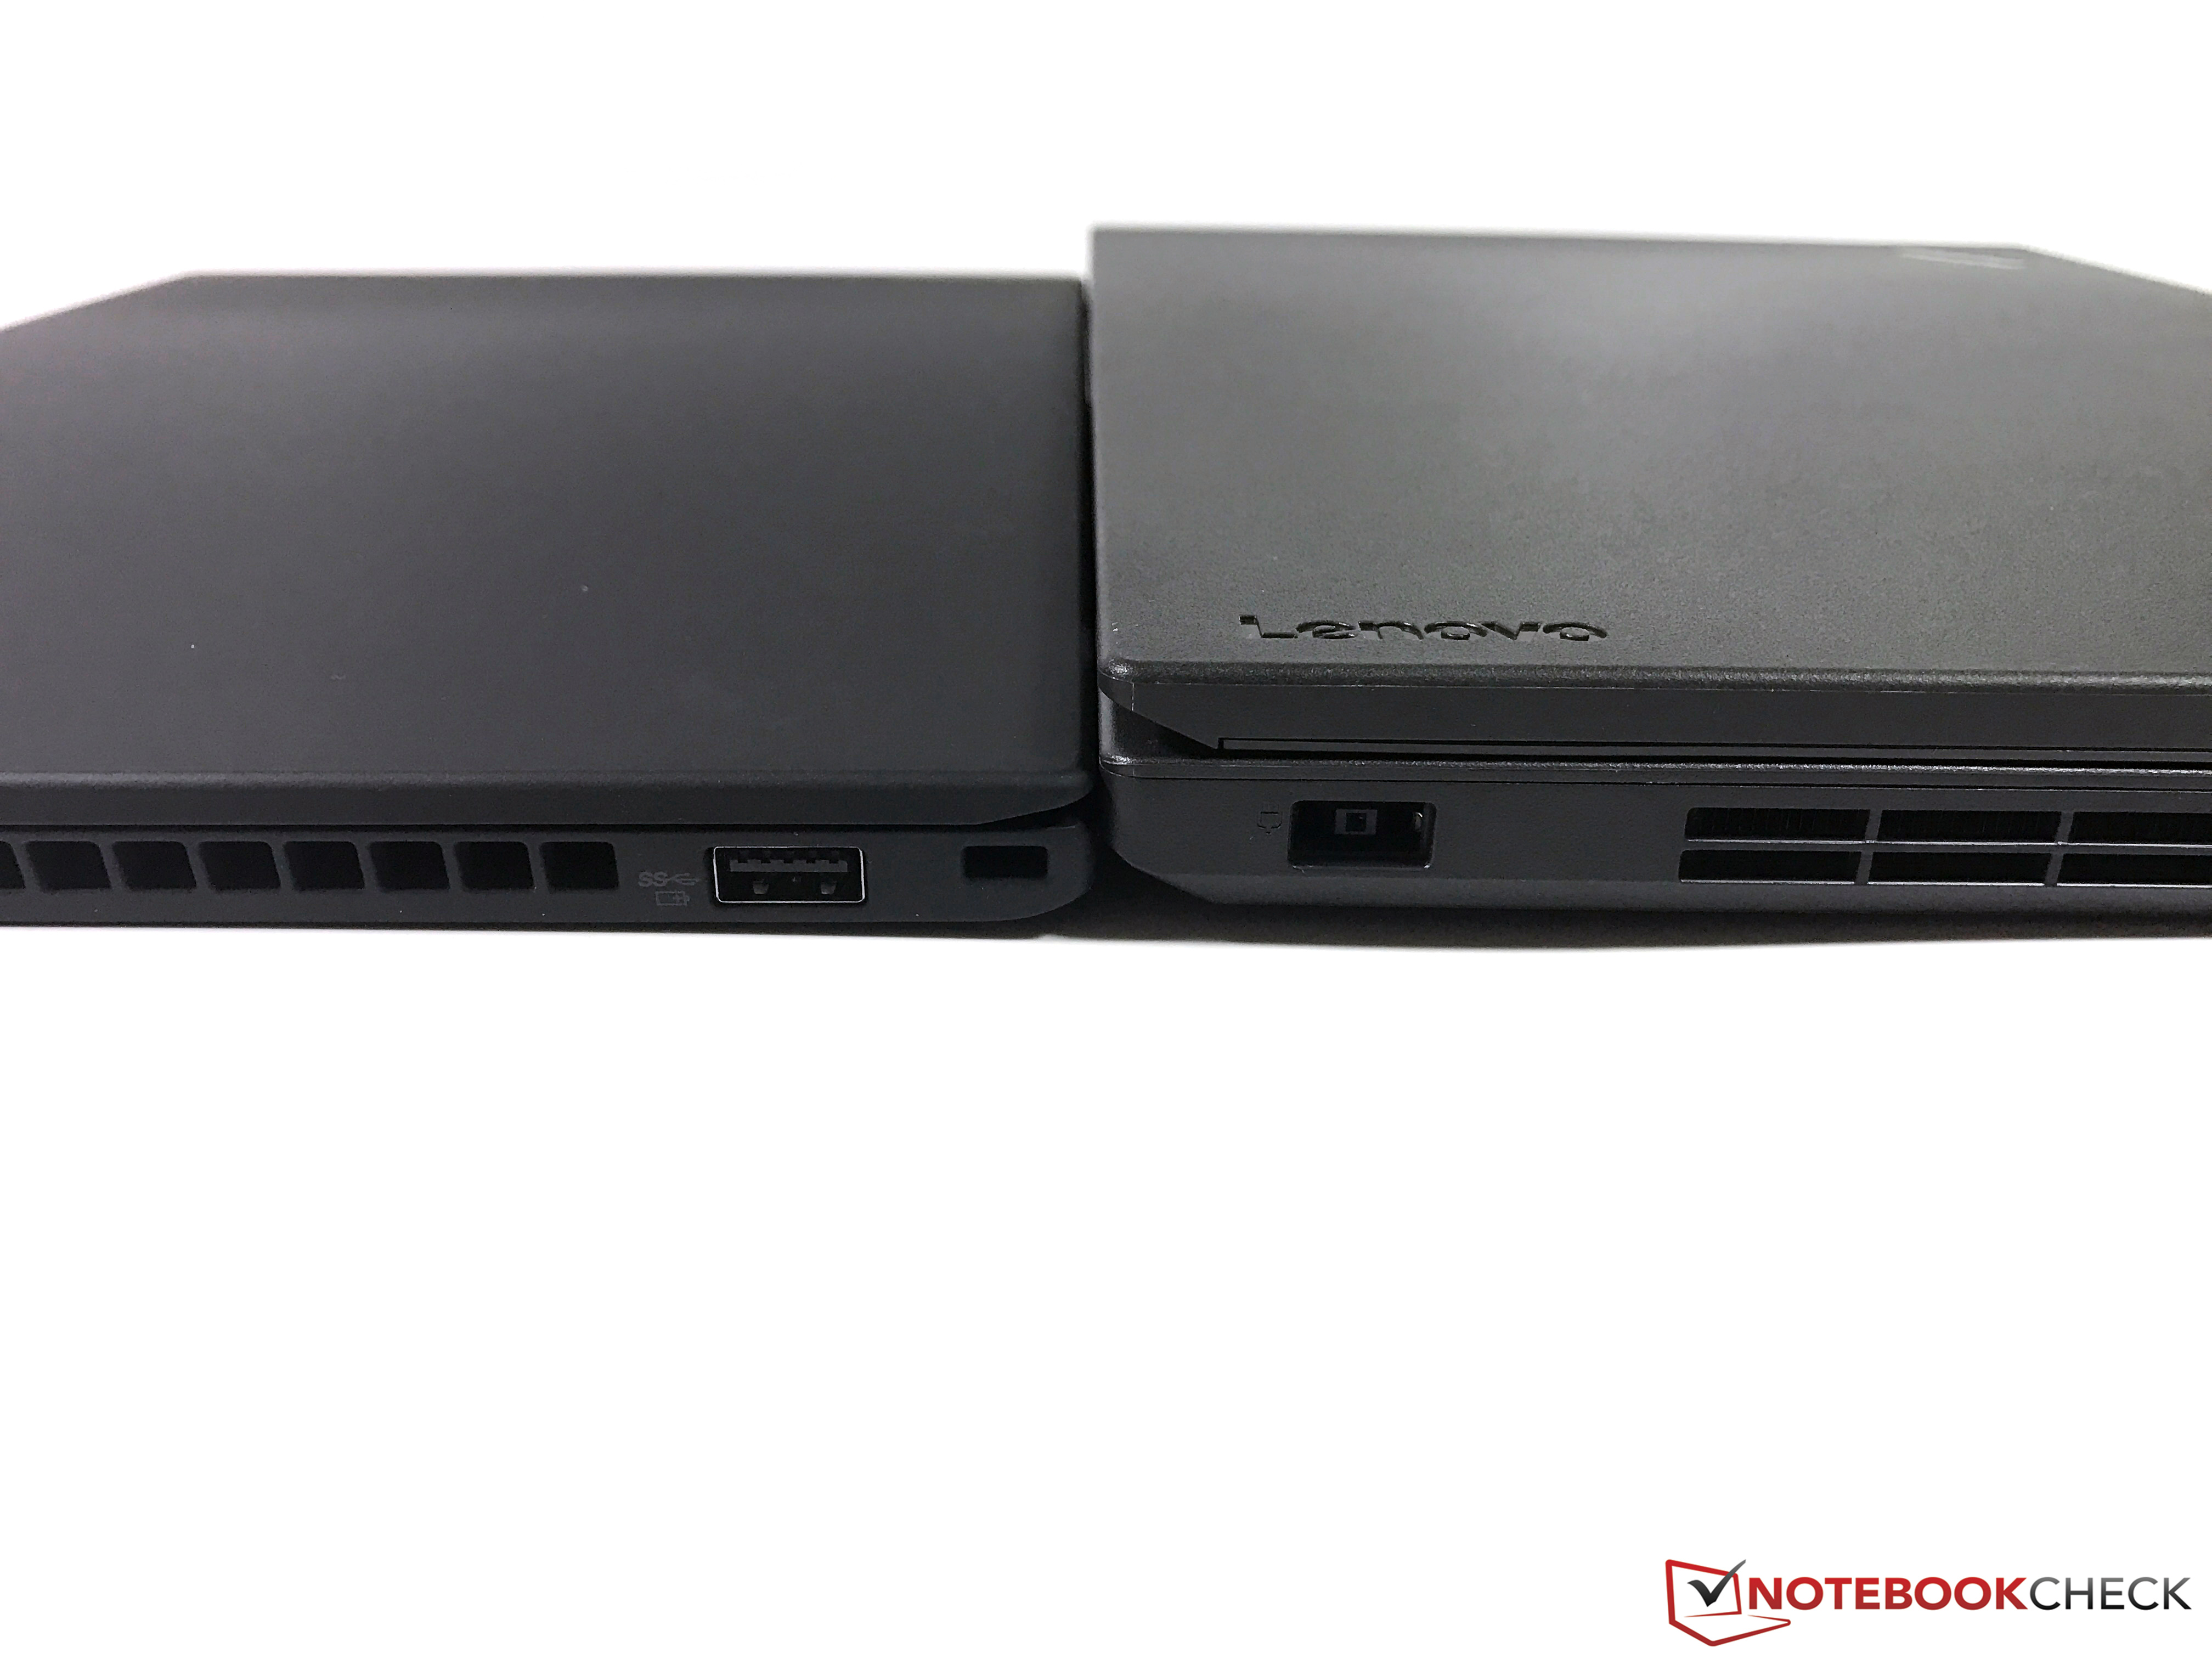 Lenovo ThinkPad L470 (i5-7200U, FHD-IPS) Laptop Review - NotebookCheck.net Reviews